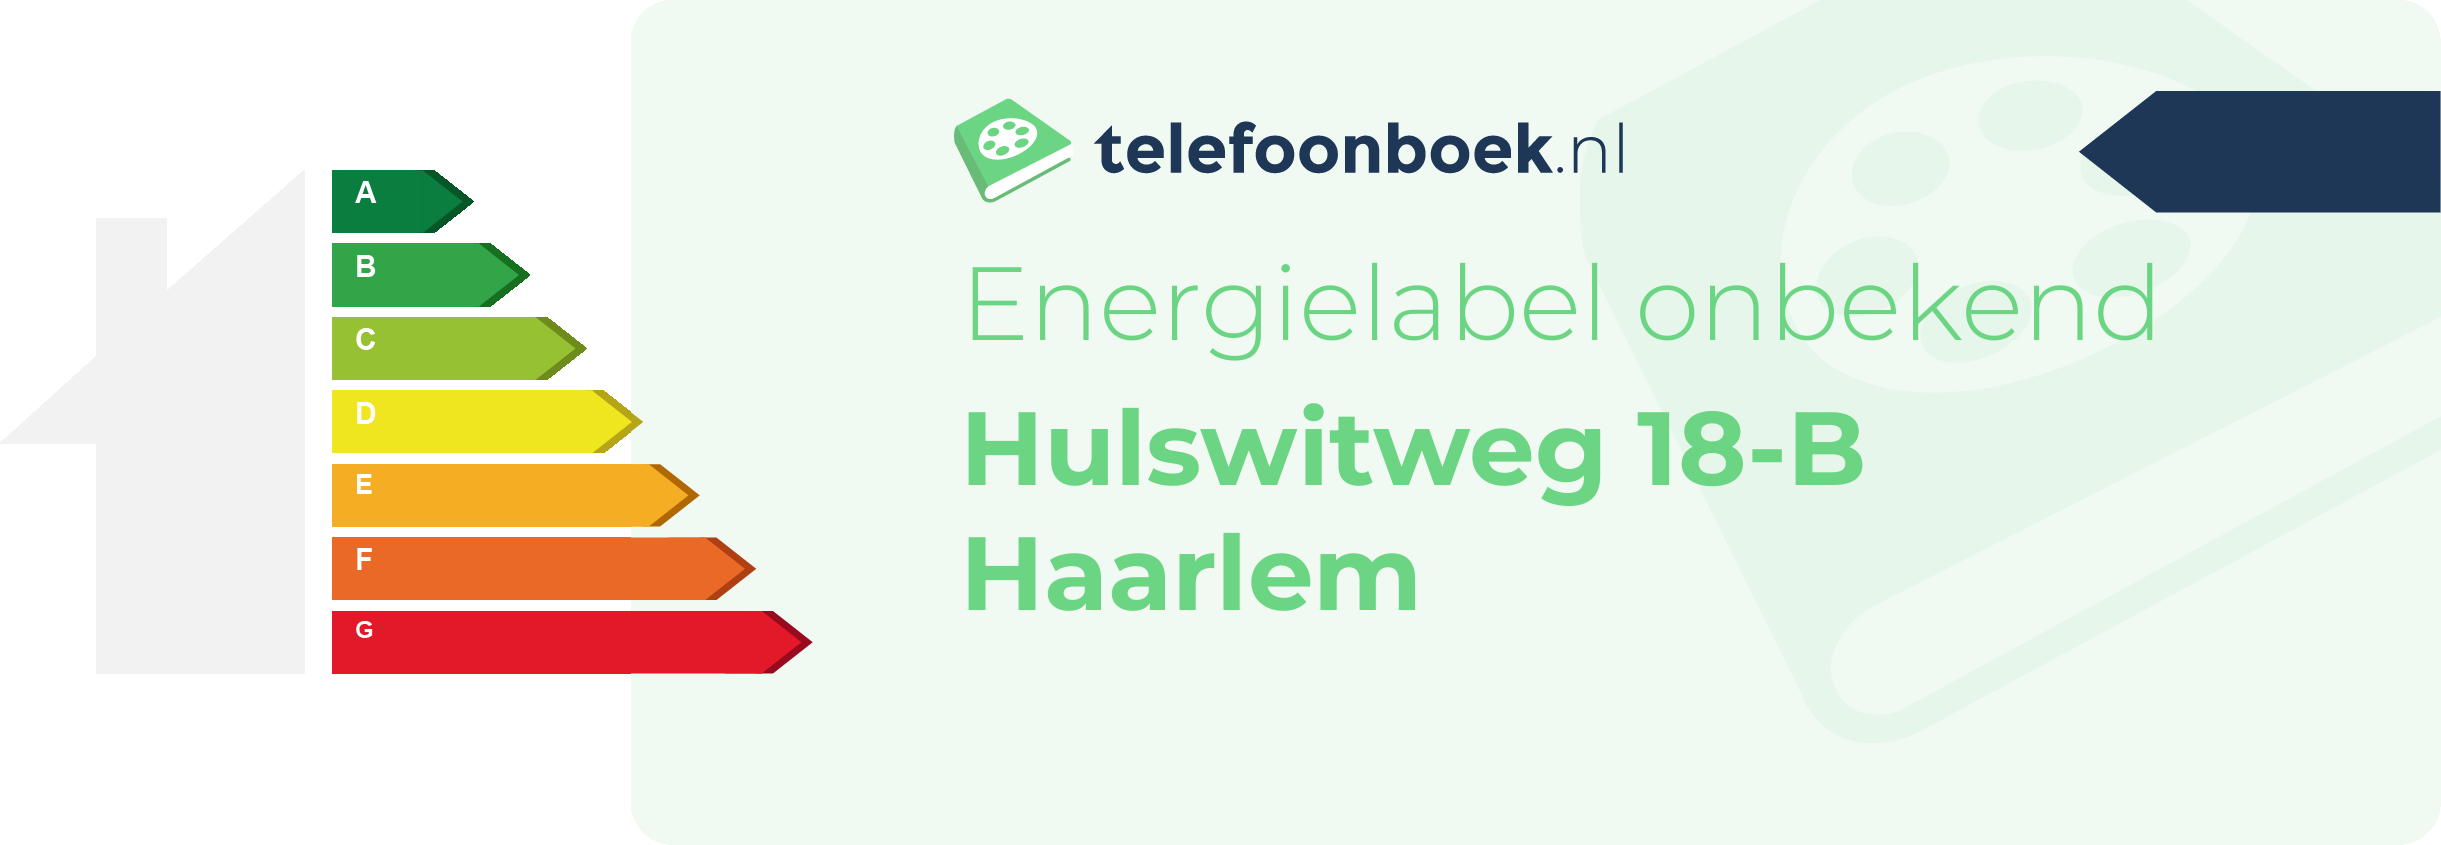 Energielabel Hulswitweg 18-B Haarlem